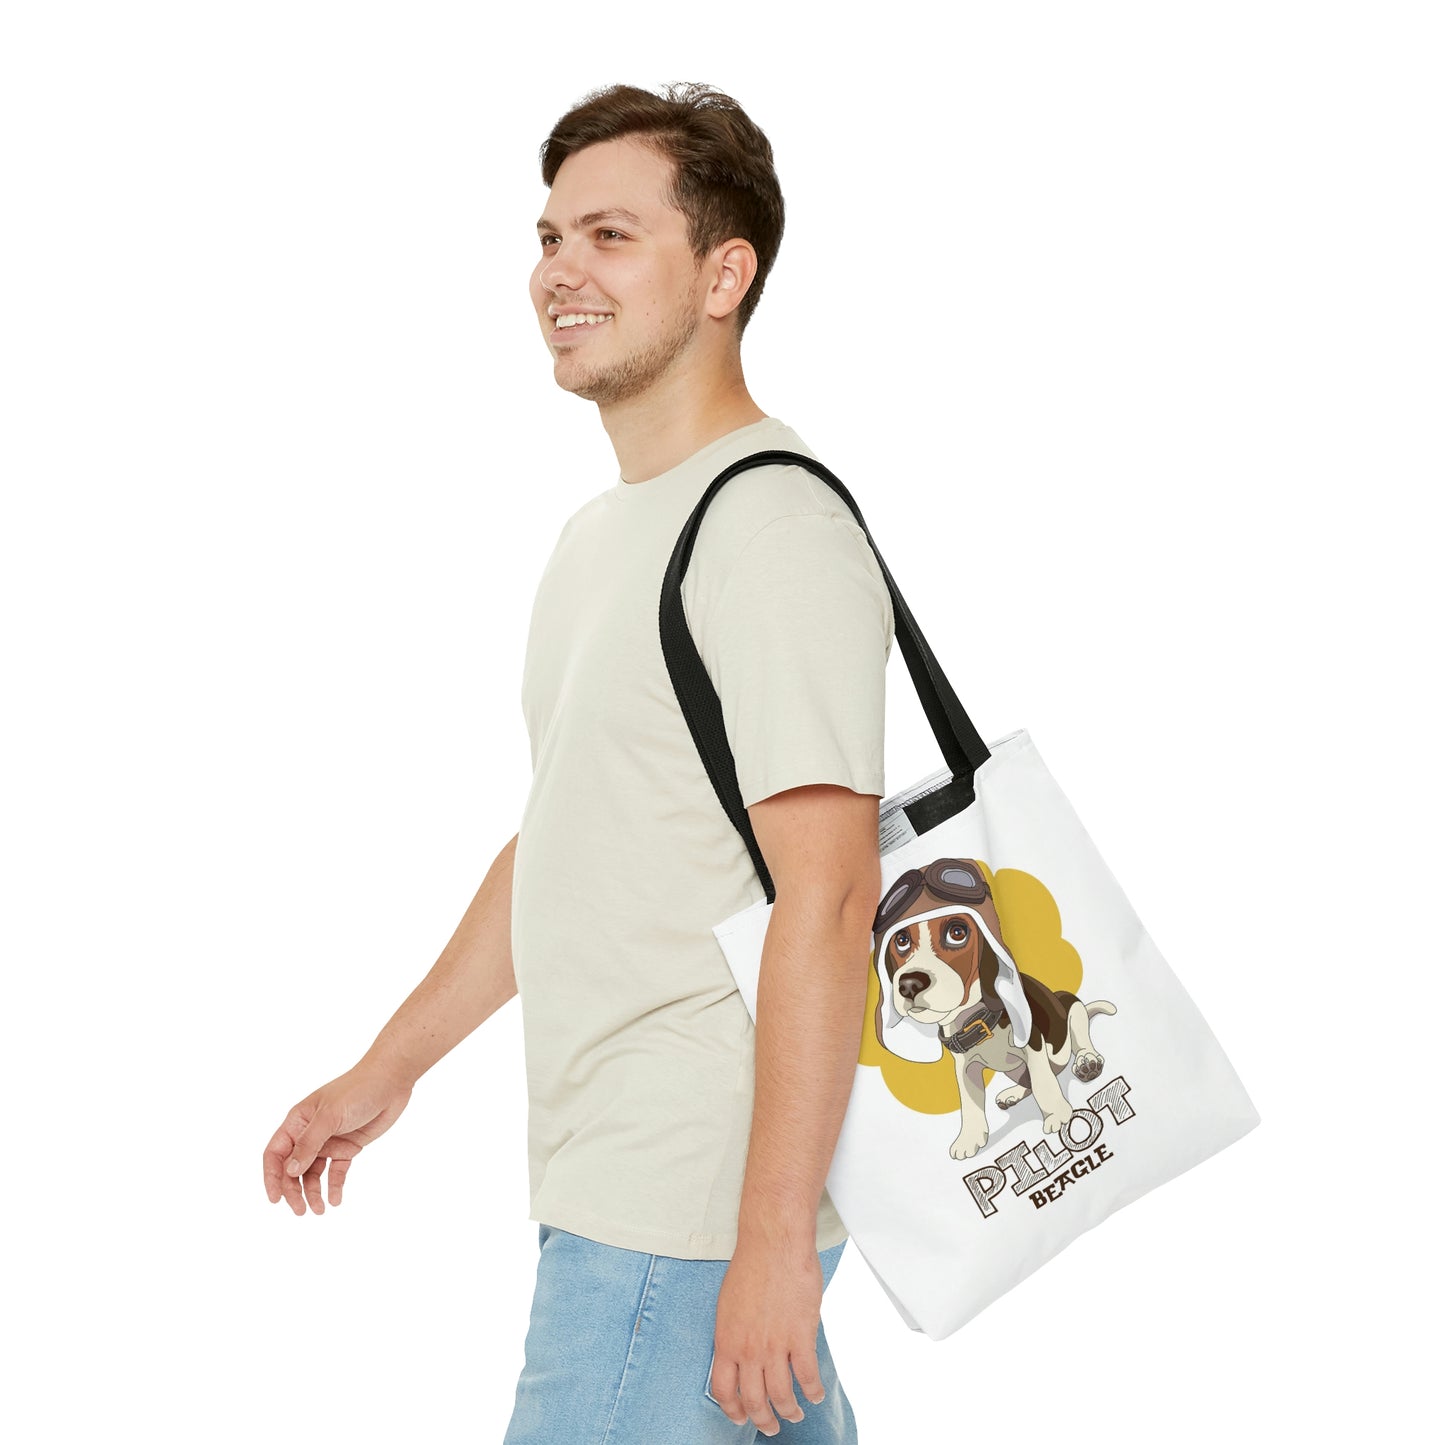 AOP Tote Bag "Puppy Beagle pilot"